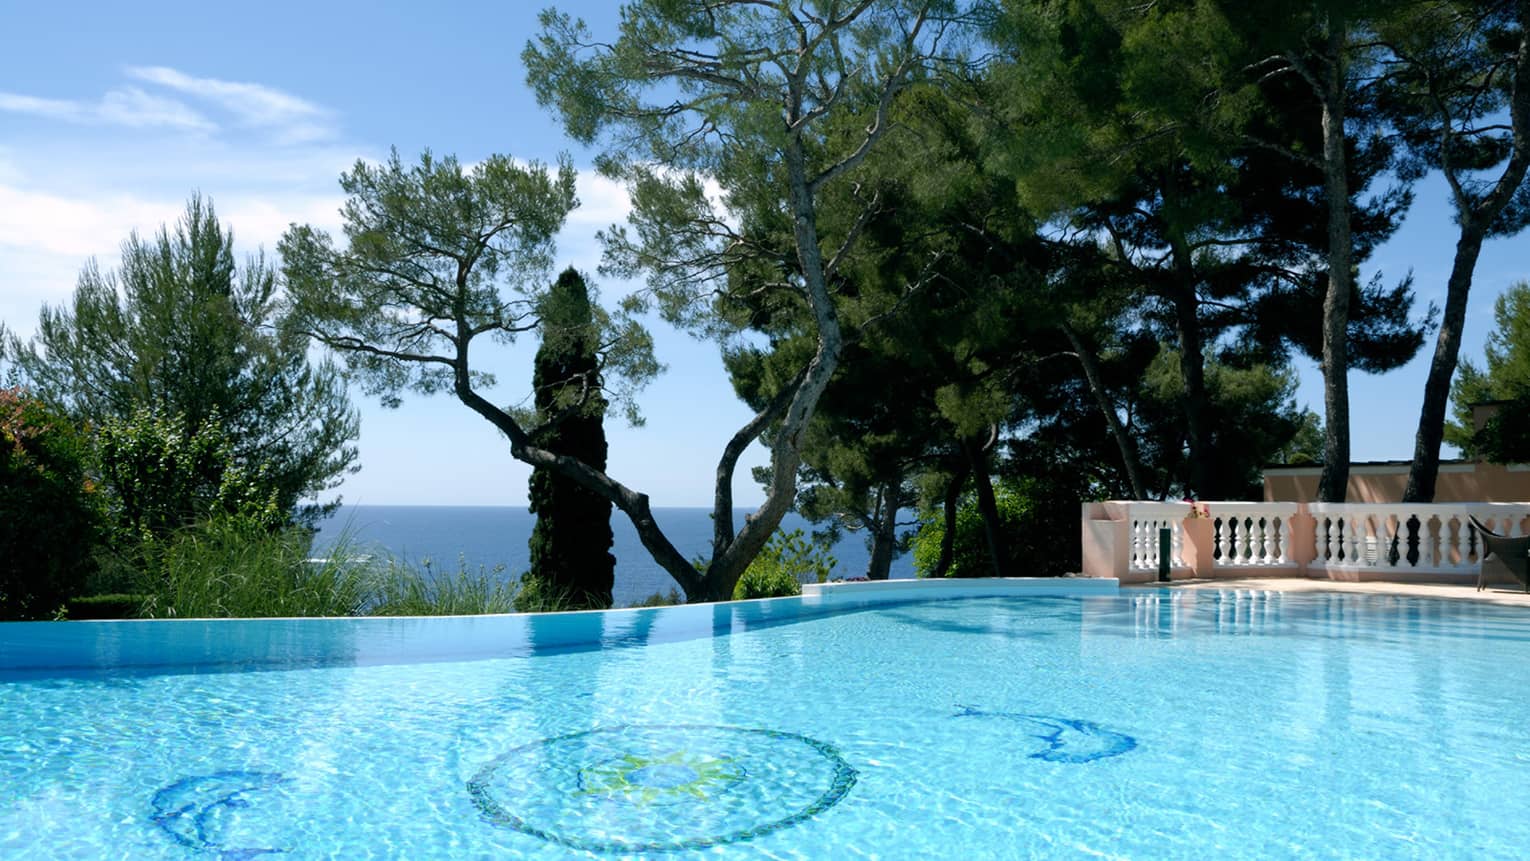 Blue outdoor swimming pool, trees, sea views